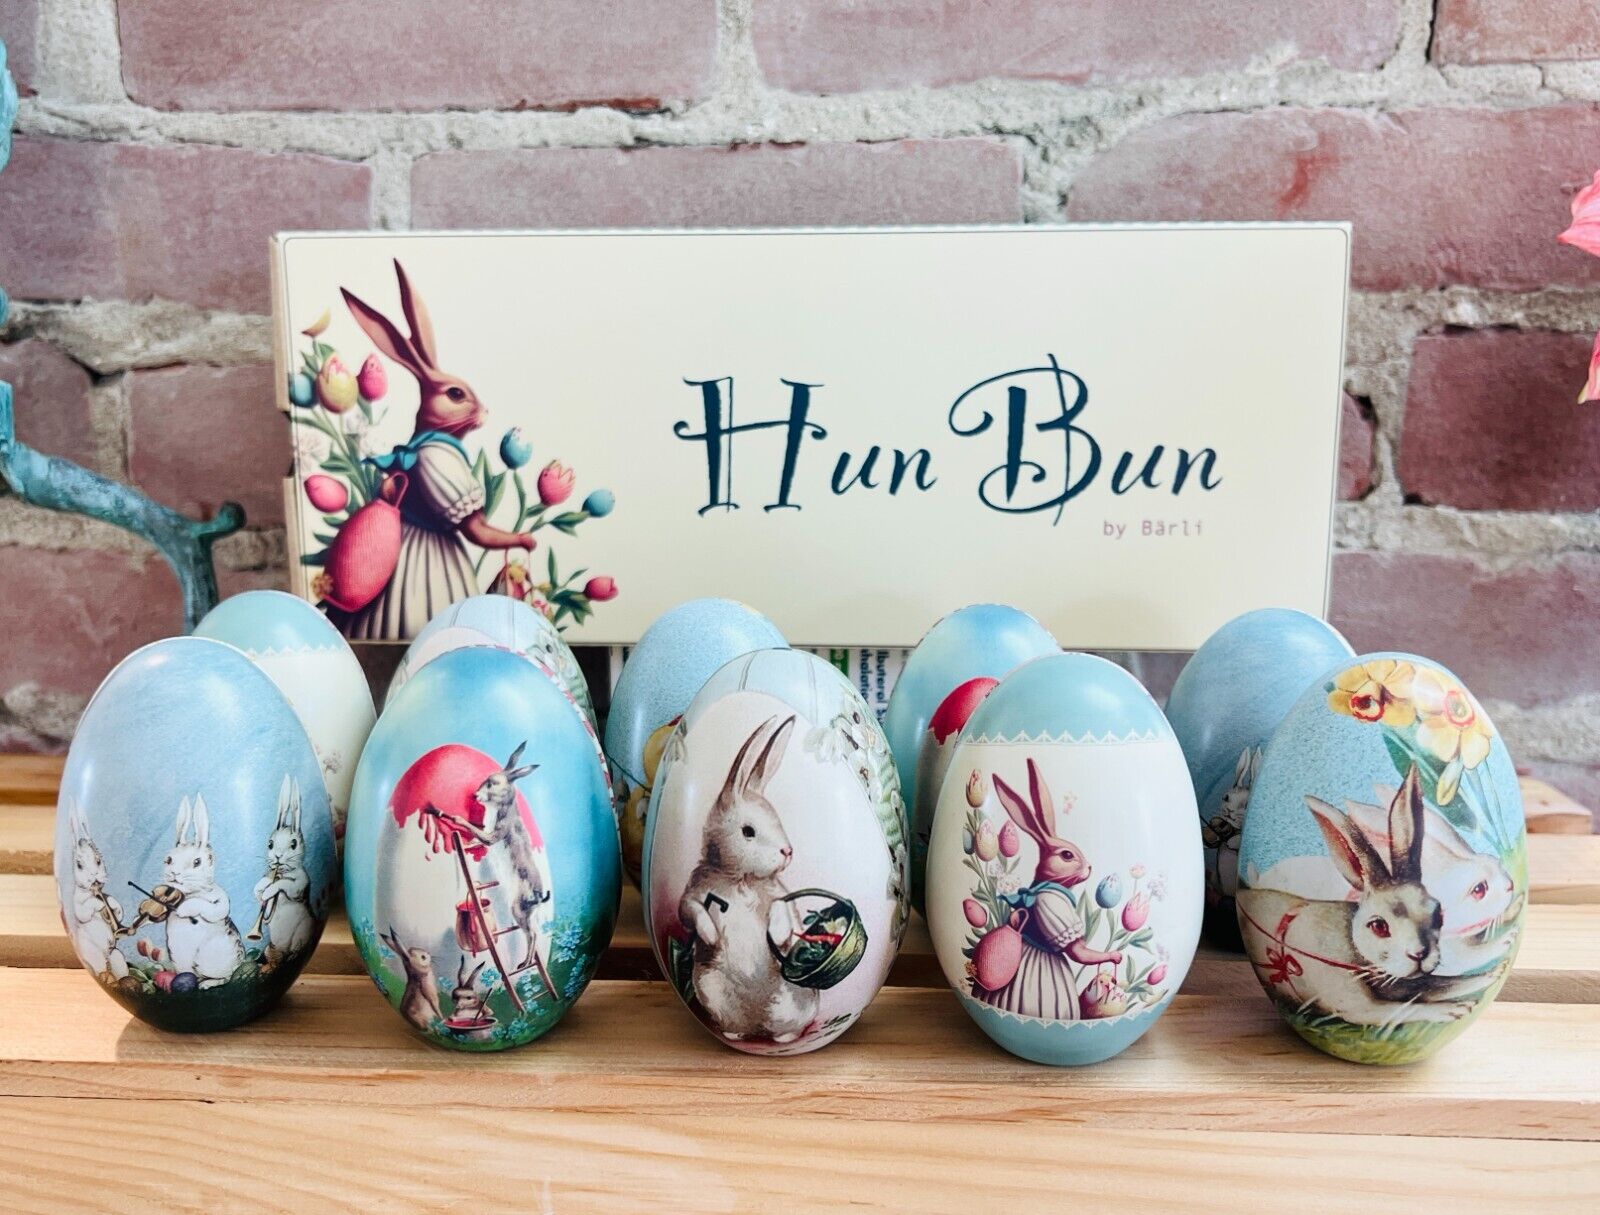 Set of Ten Fillable, Reusable Egg Tins. Metal Easter Eggs by Barli